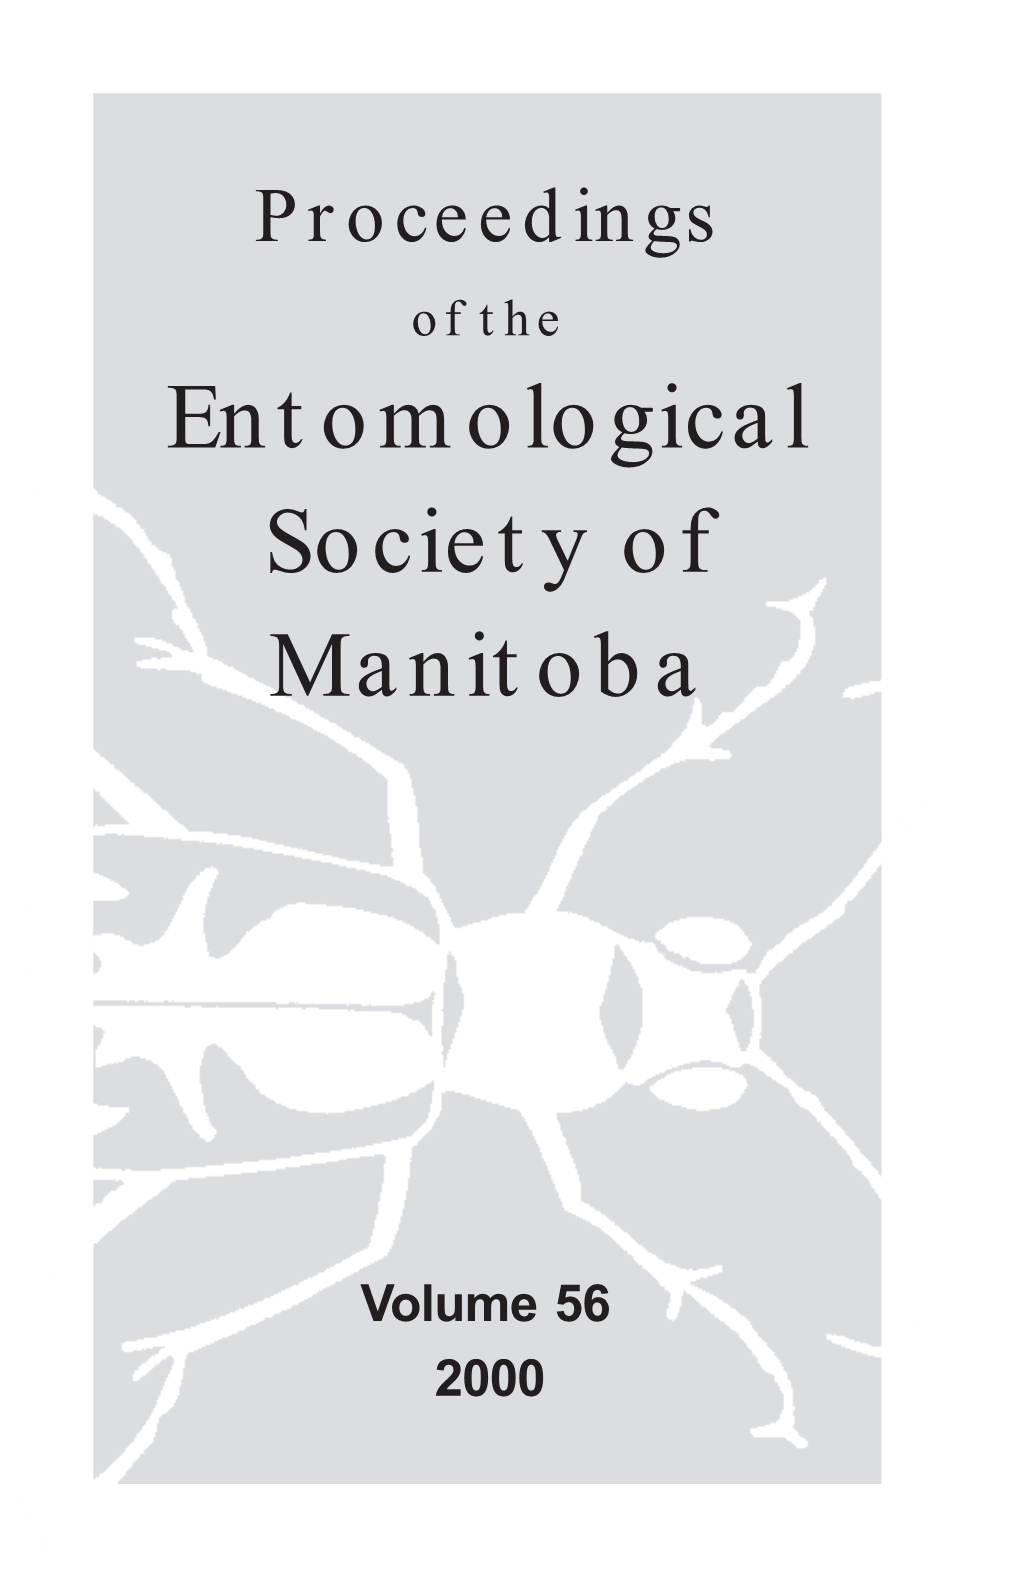 Entomological Society of Manitoba